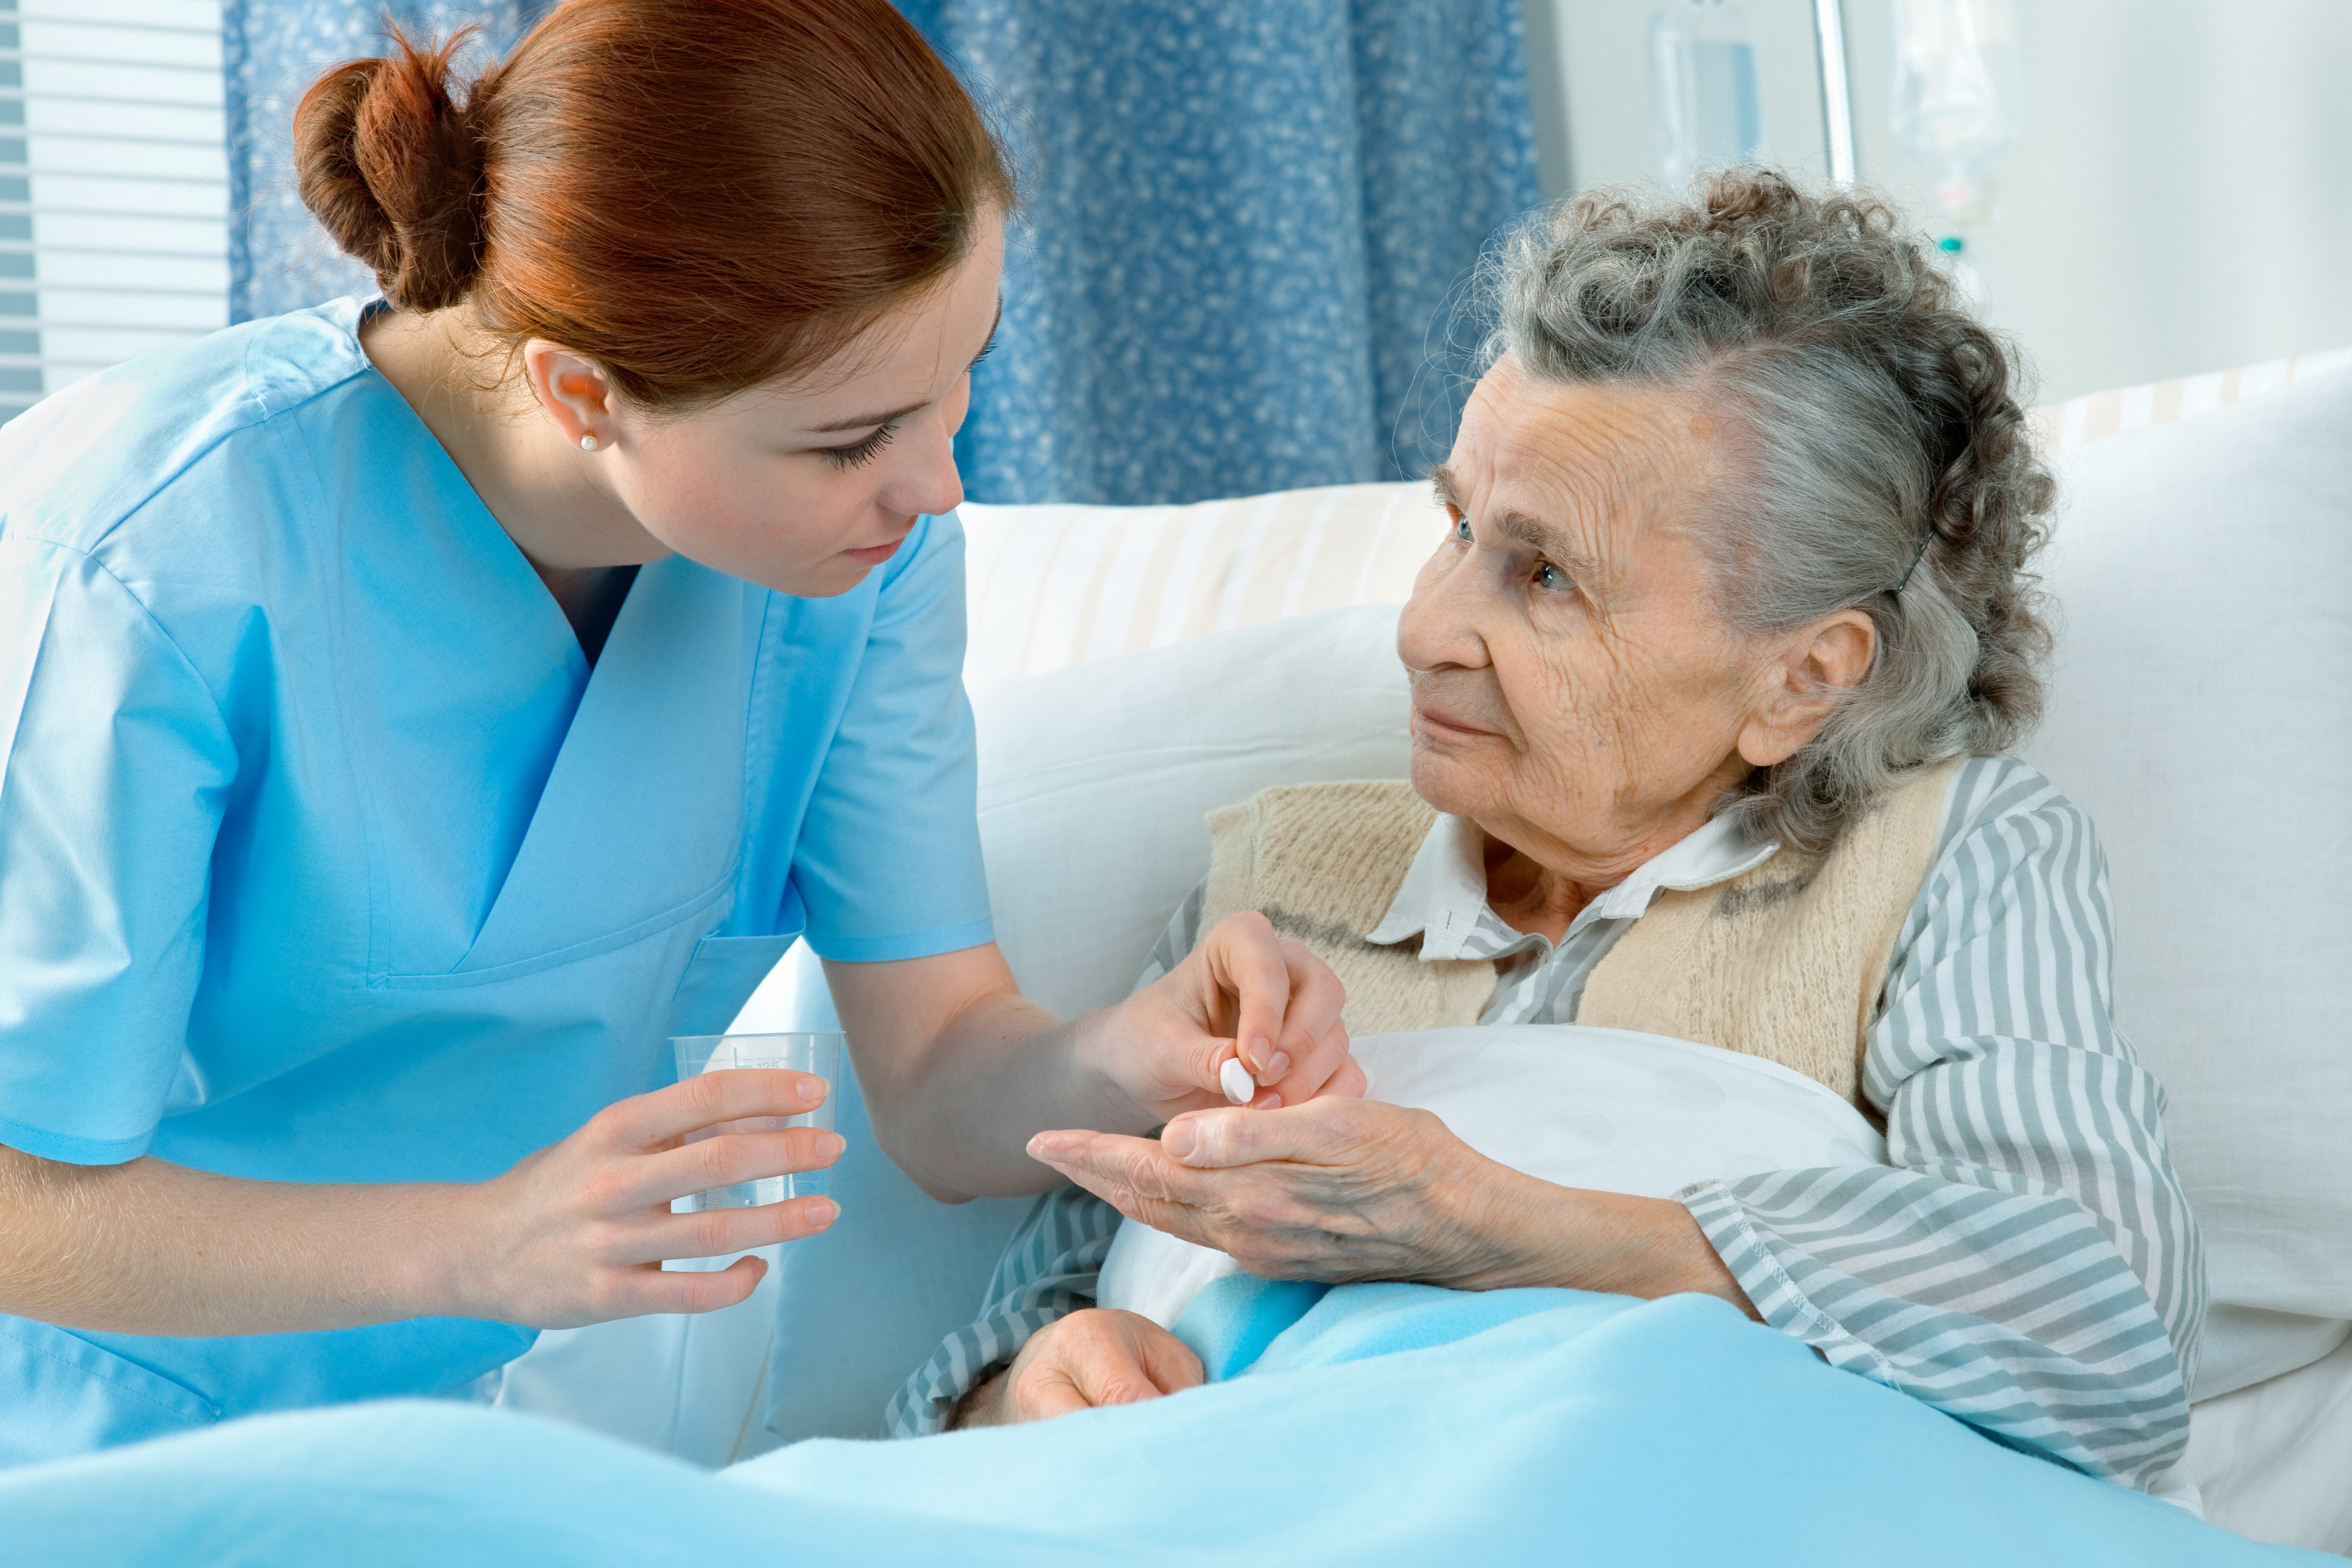 Nurse in blue scrub assisting a patient.